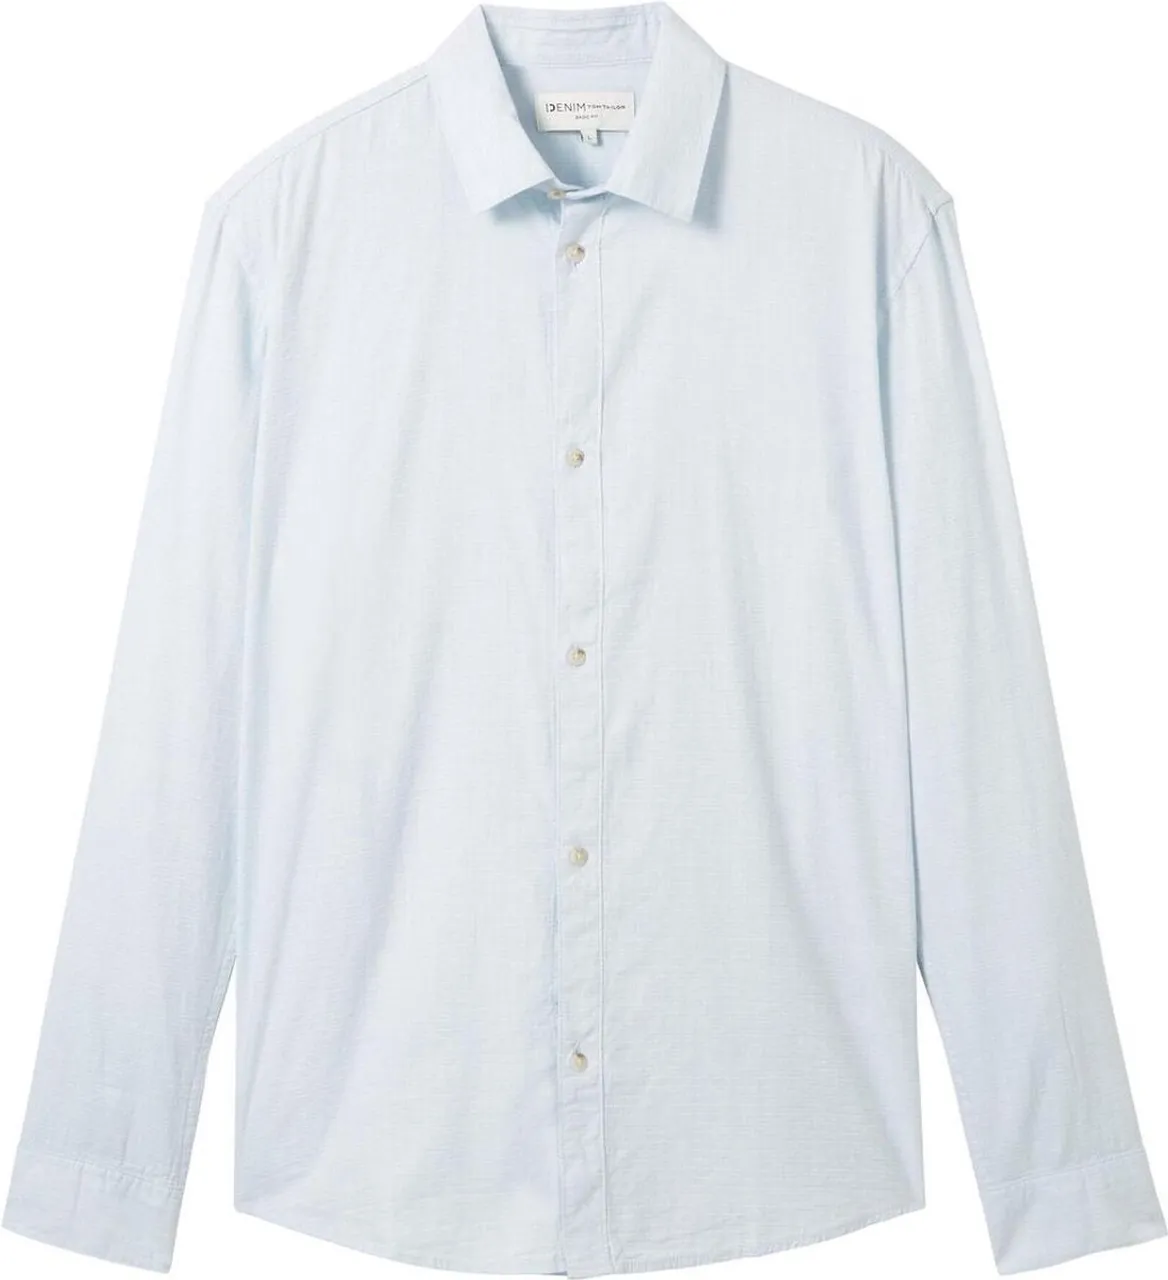 Tom Tailor Overhemd Gestructureerd Overhemd 1040148xx12 34774 Mannen